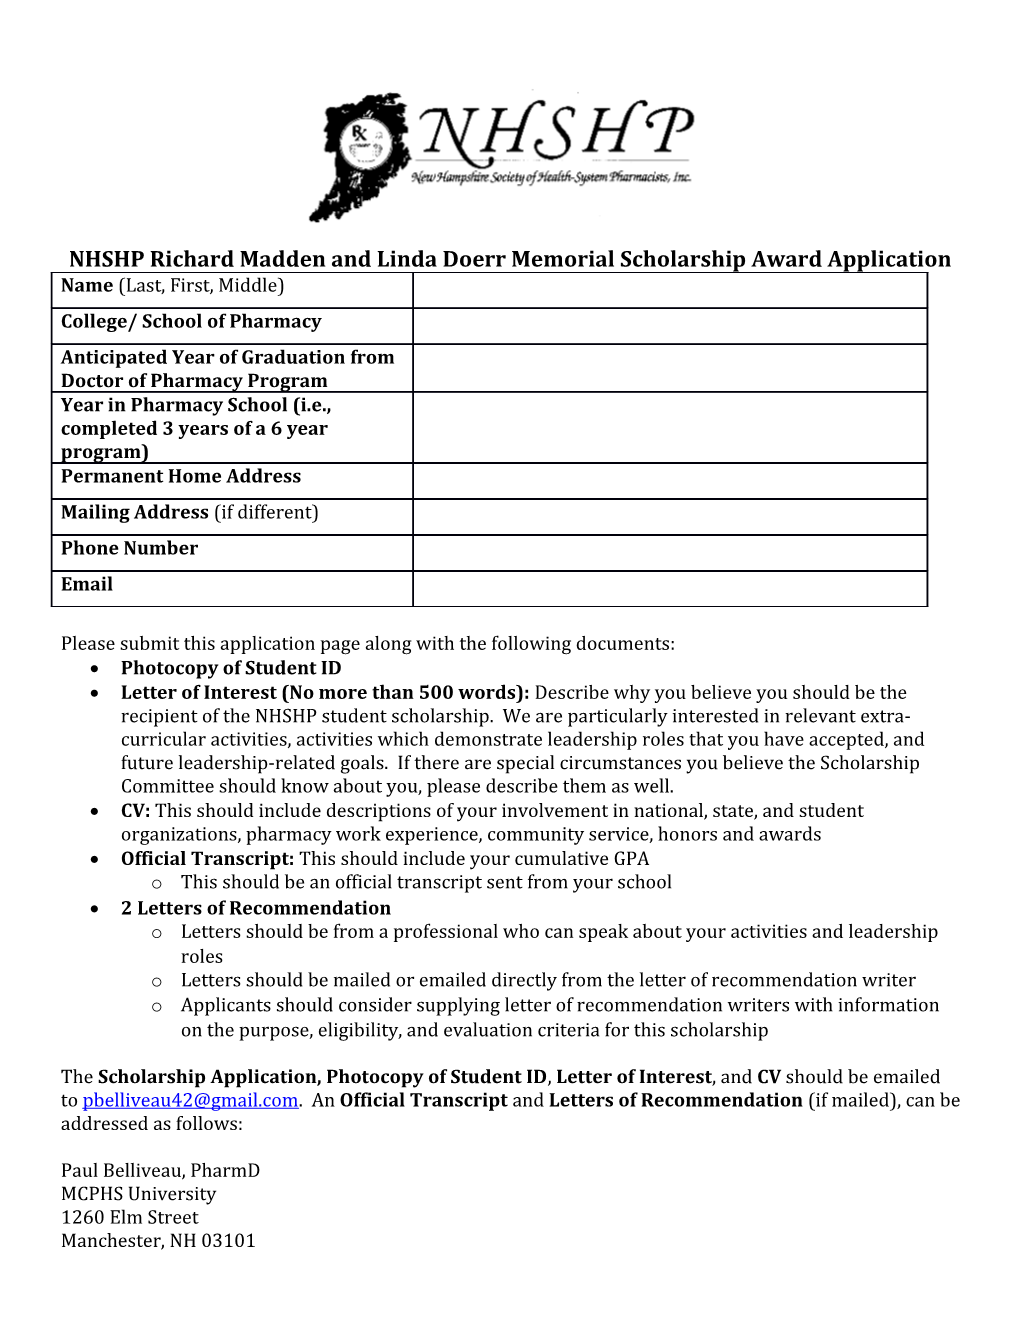 NHSHP Richard Madden and Linda Doerr Memorial Scholarship Award Application